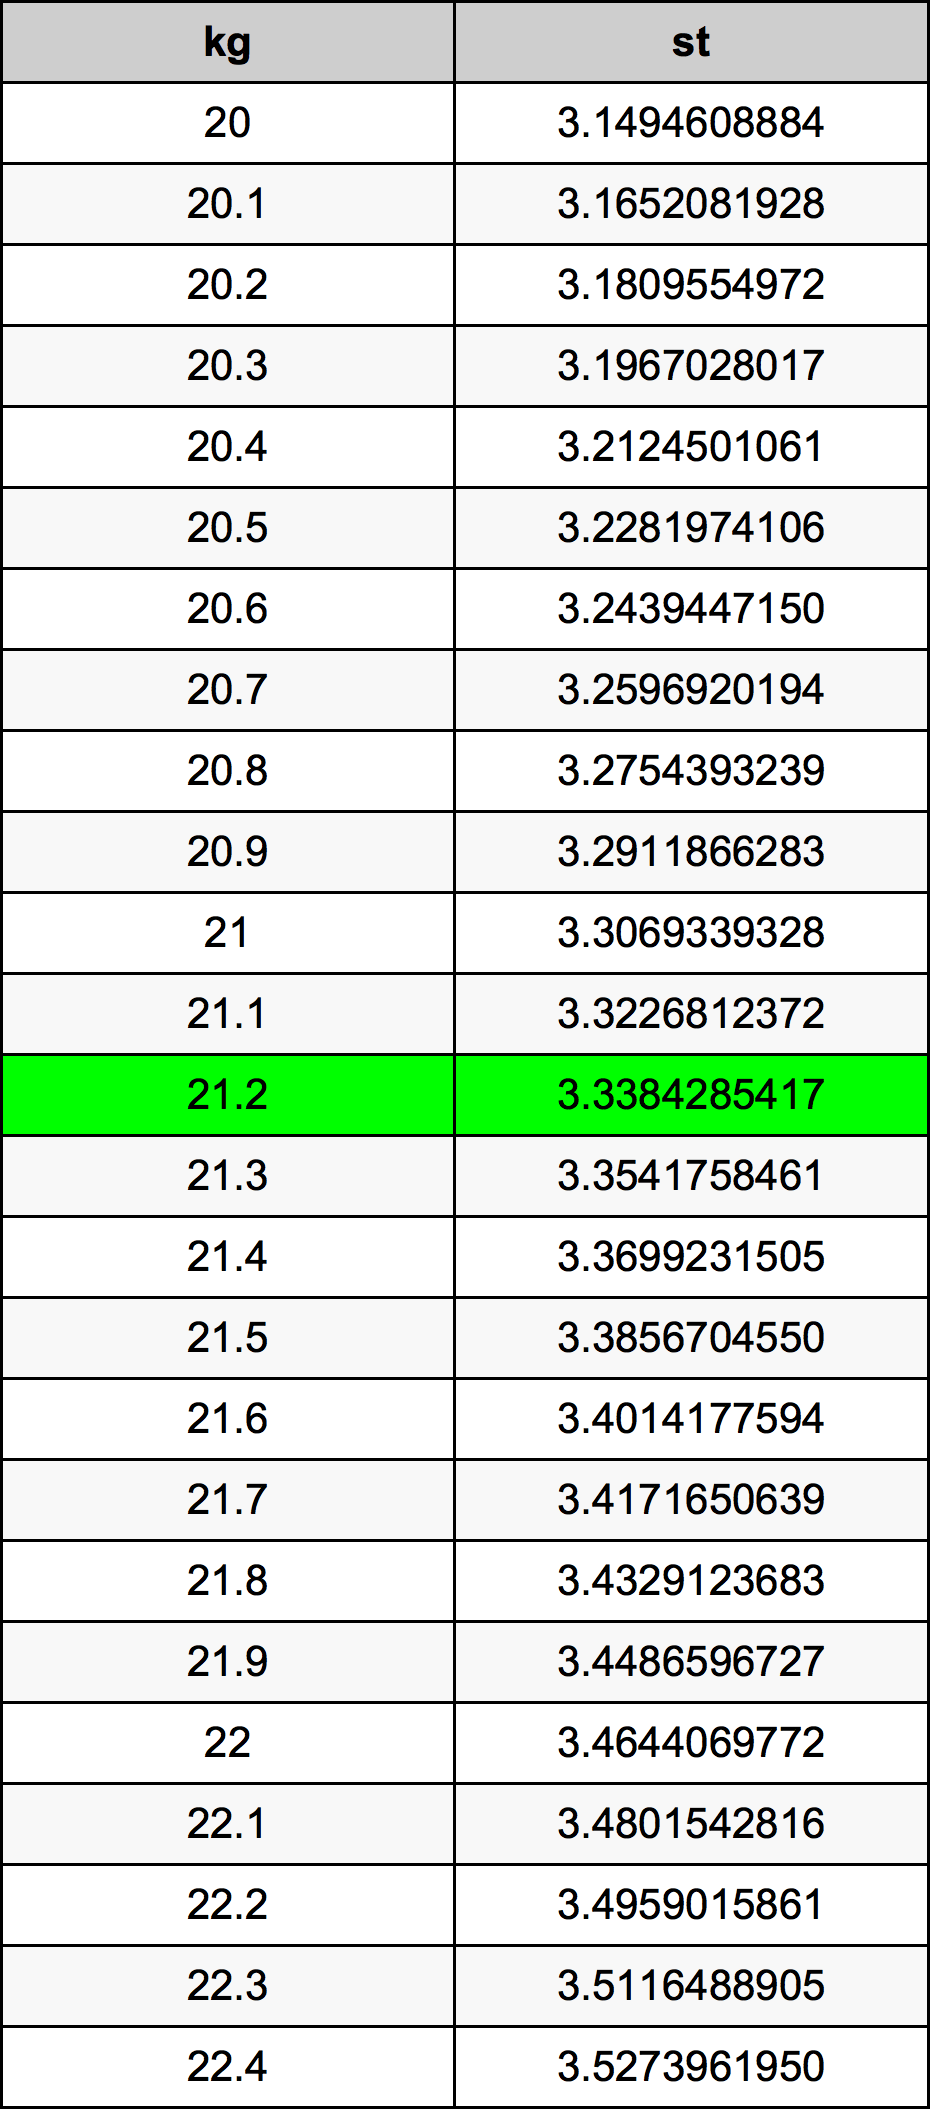 21.2 Kilogramma konverżjoni tabella